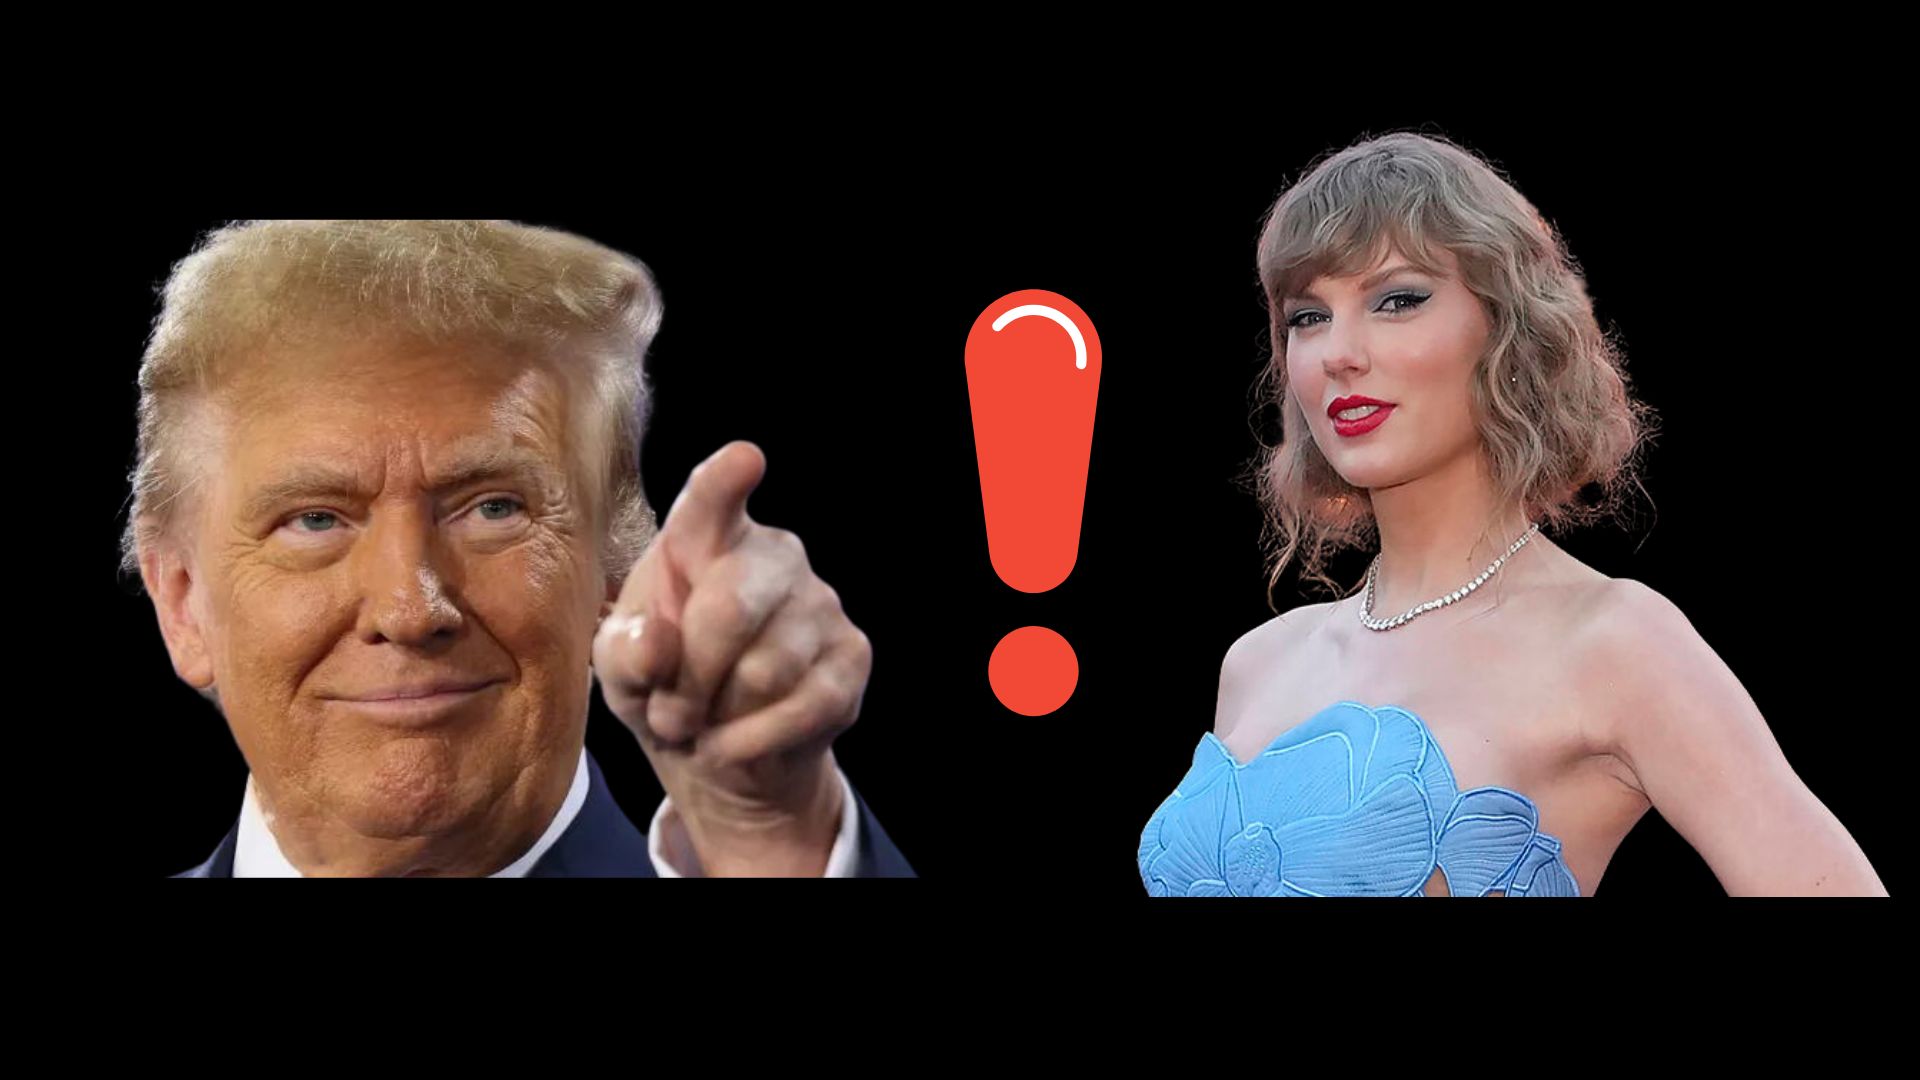 Trump Blasts Taylor Swift as “Disloyal”